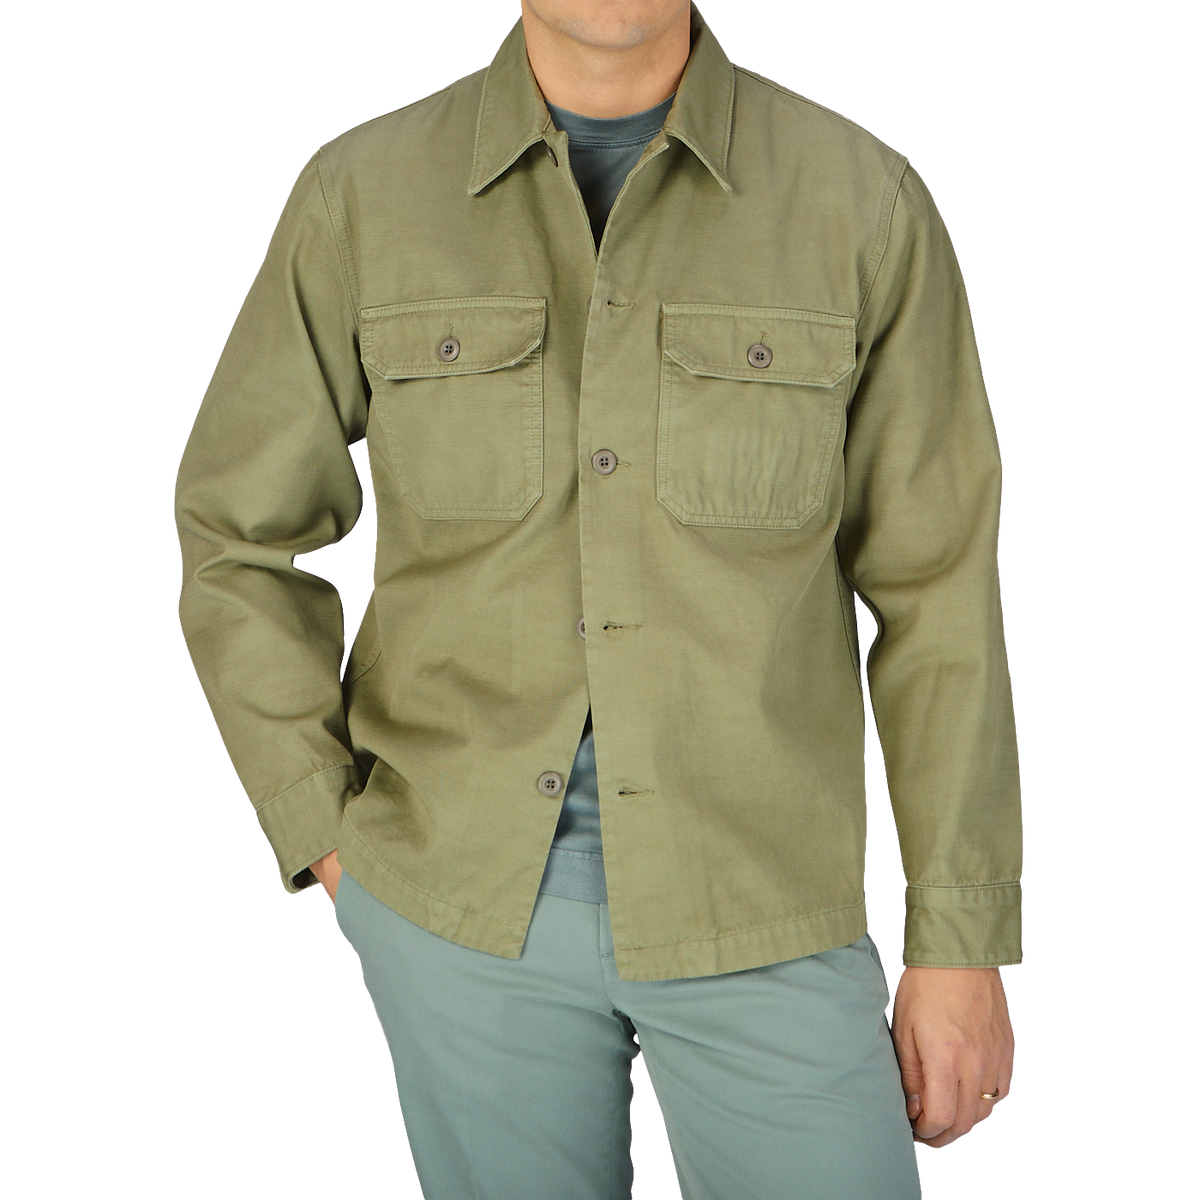 A man wearing a Grass Green Greto Cotton Overshirt and pants by Tela Genova.